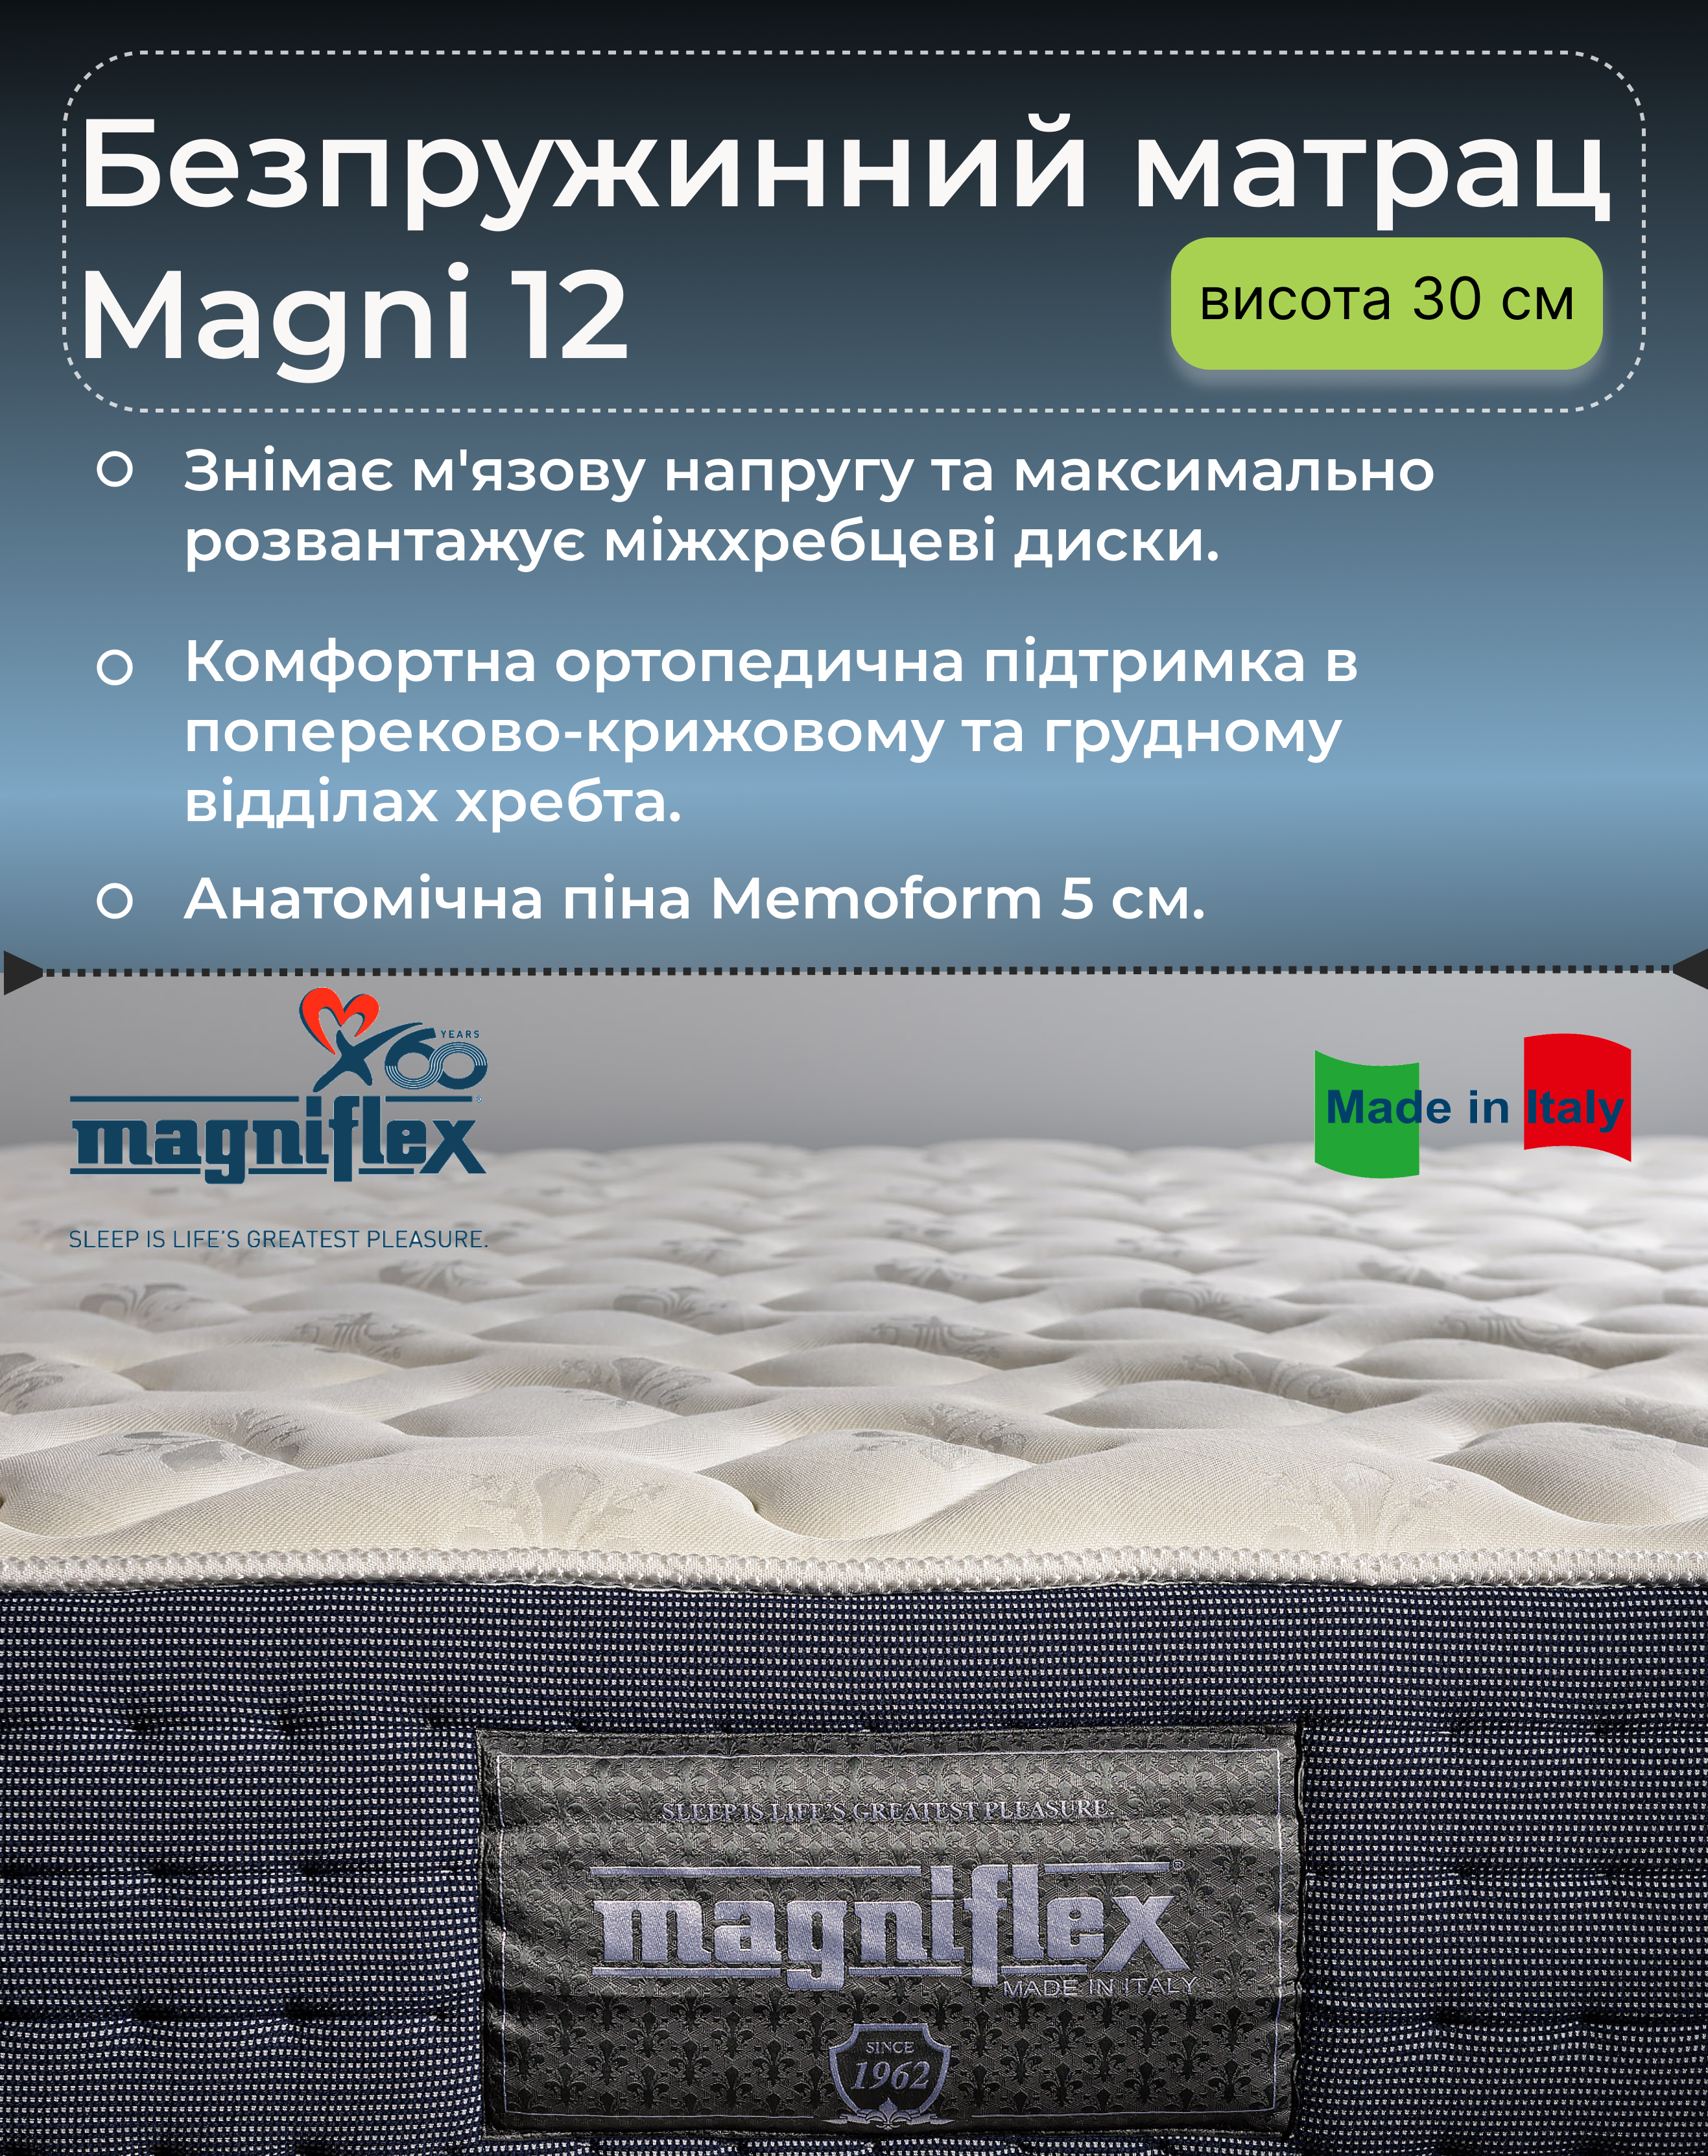 Magniflex матрац та товари для сну